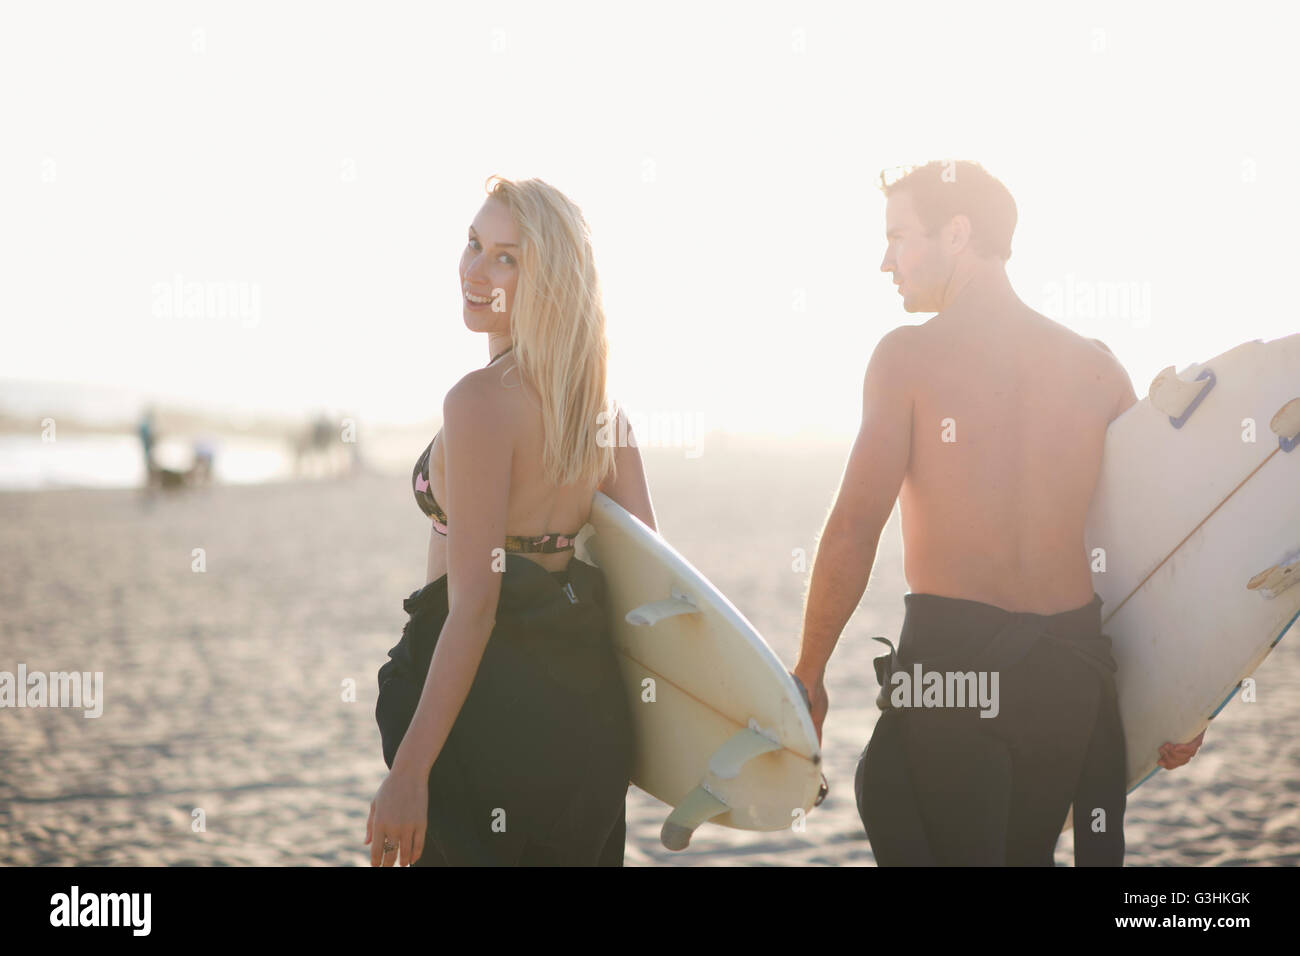 Couple carrying surf surfboards sur soleil, Venice Beach, California, USA Banque D'Images